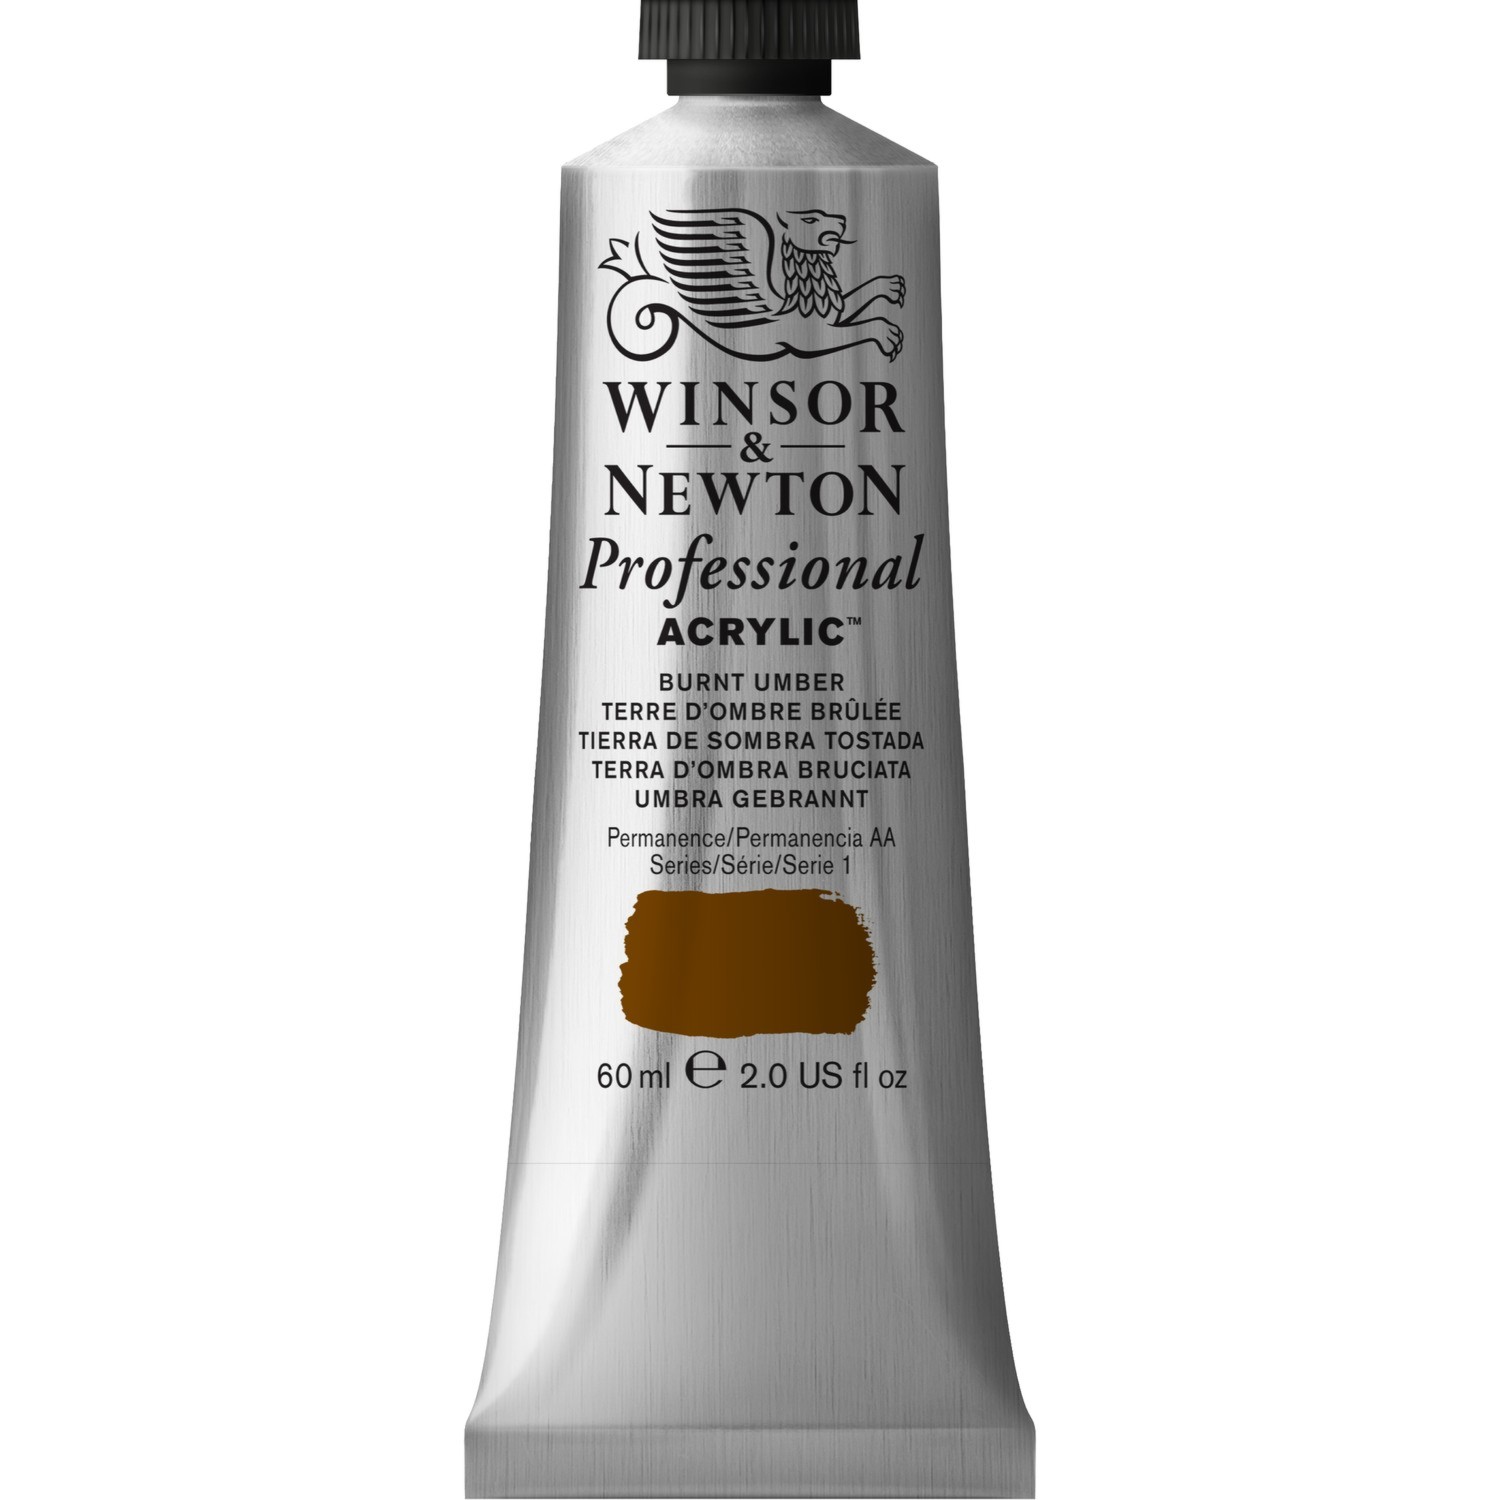 Winsor and Newton 60ml Professional Acrylic Paint - Burnt Umber Image 1